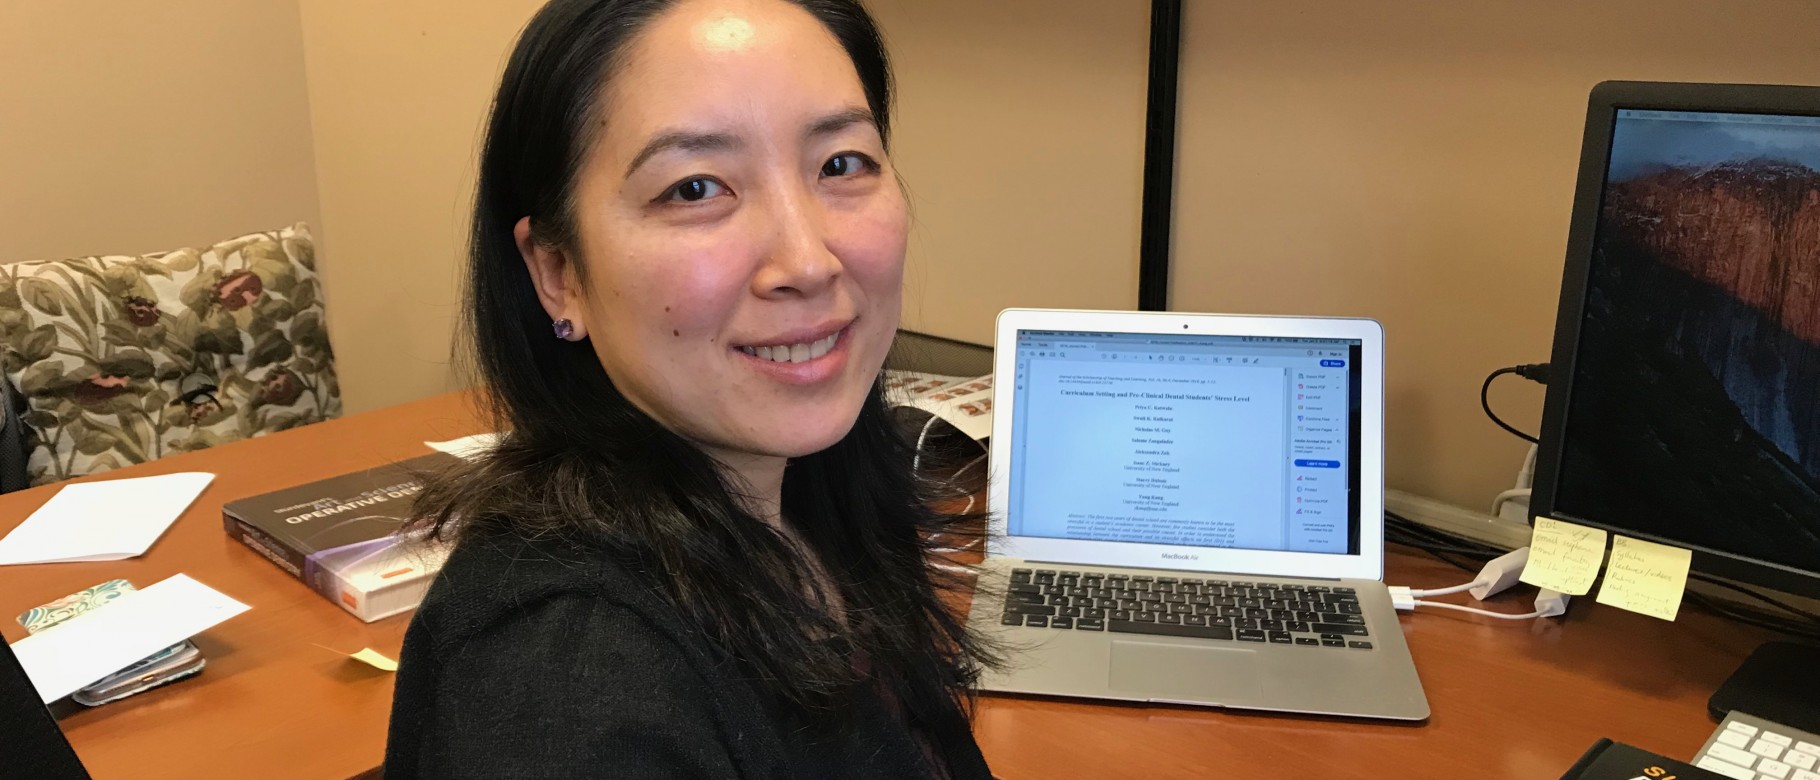 Yang Kang led an educational research project on stress among dental students